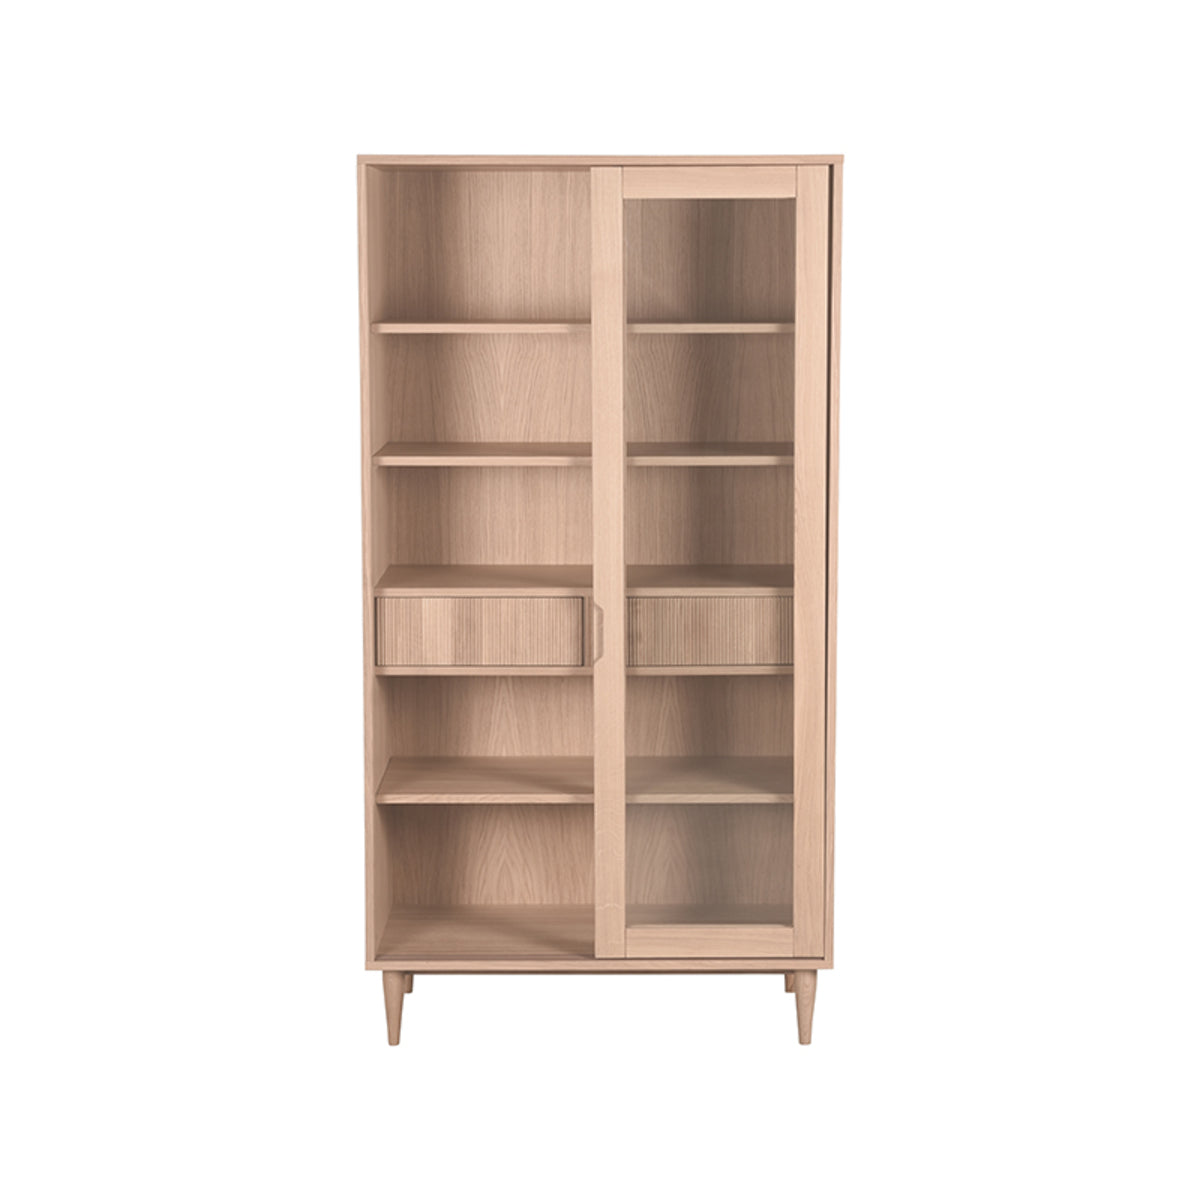 LABEL51 Display cabinet Jule - Natural - Oak - 100 cm